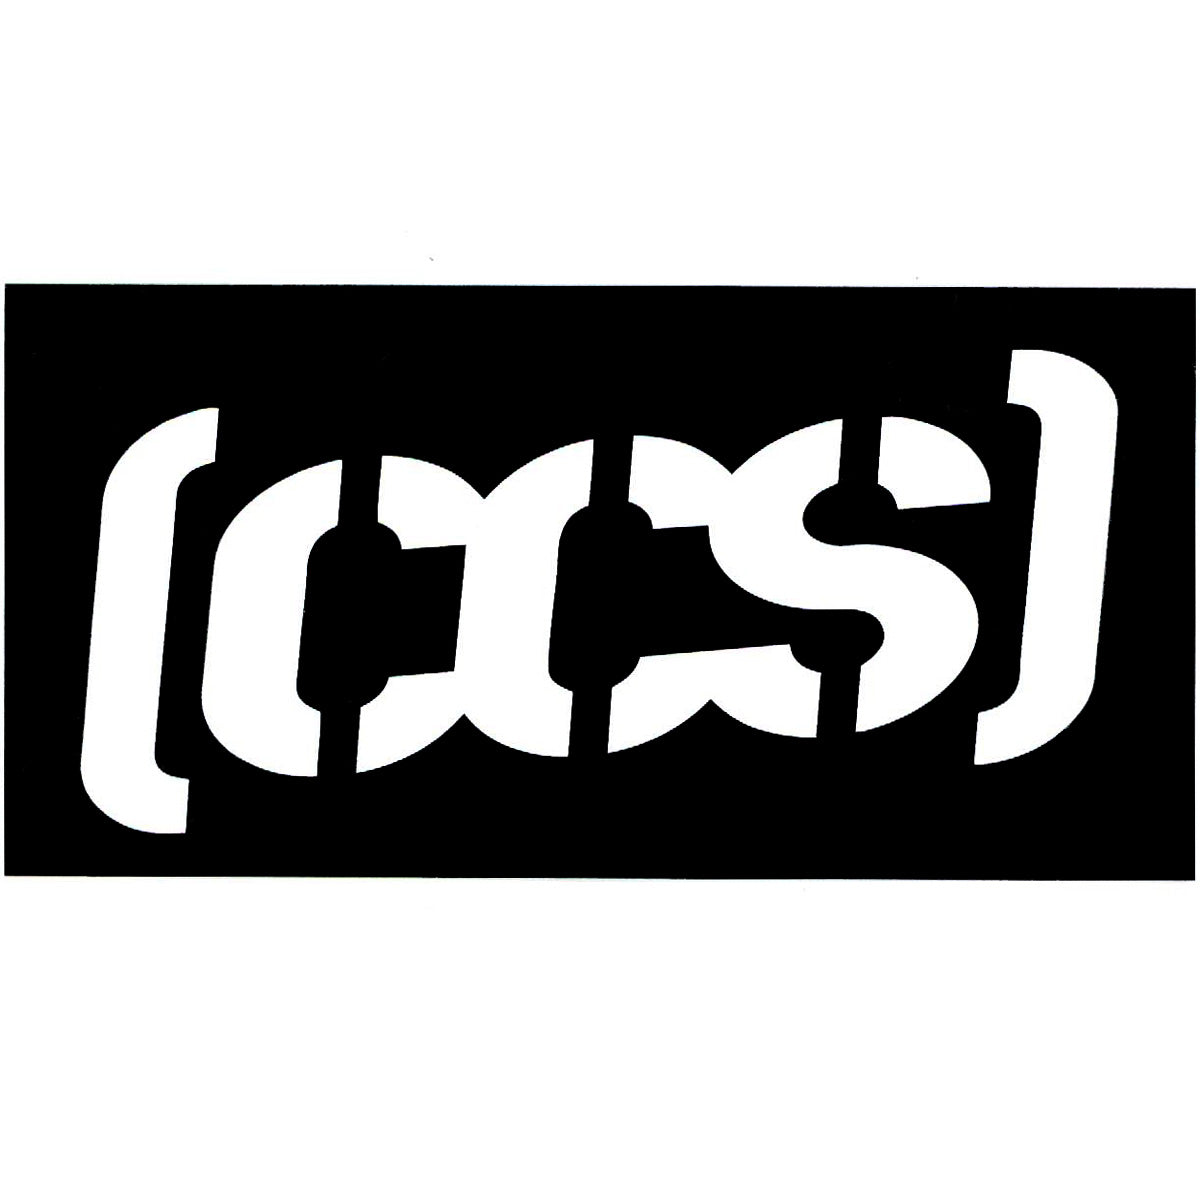 CCS Stock Sticker - Black image 1